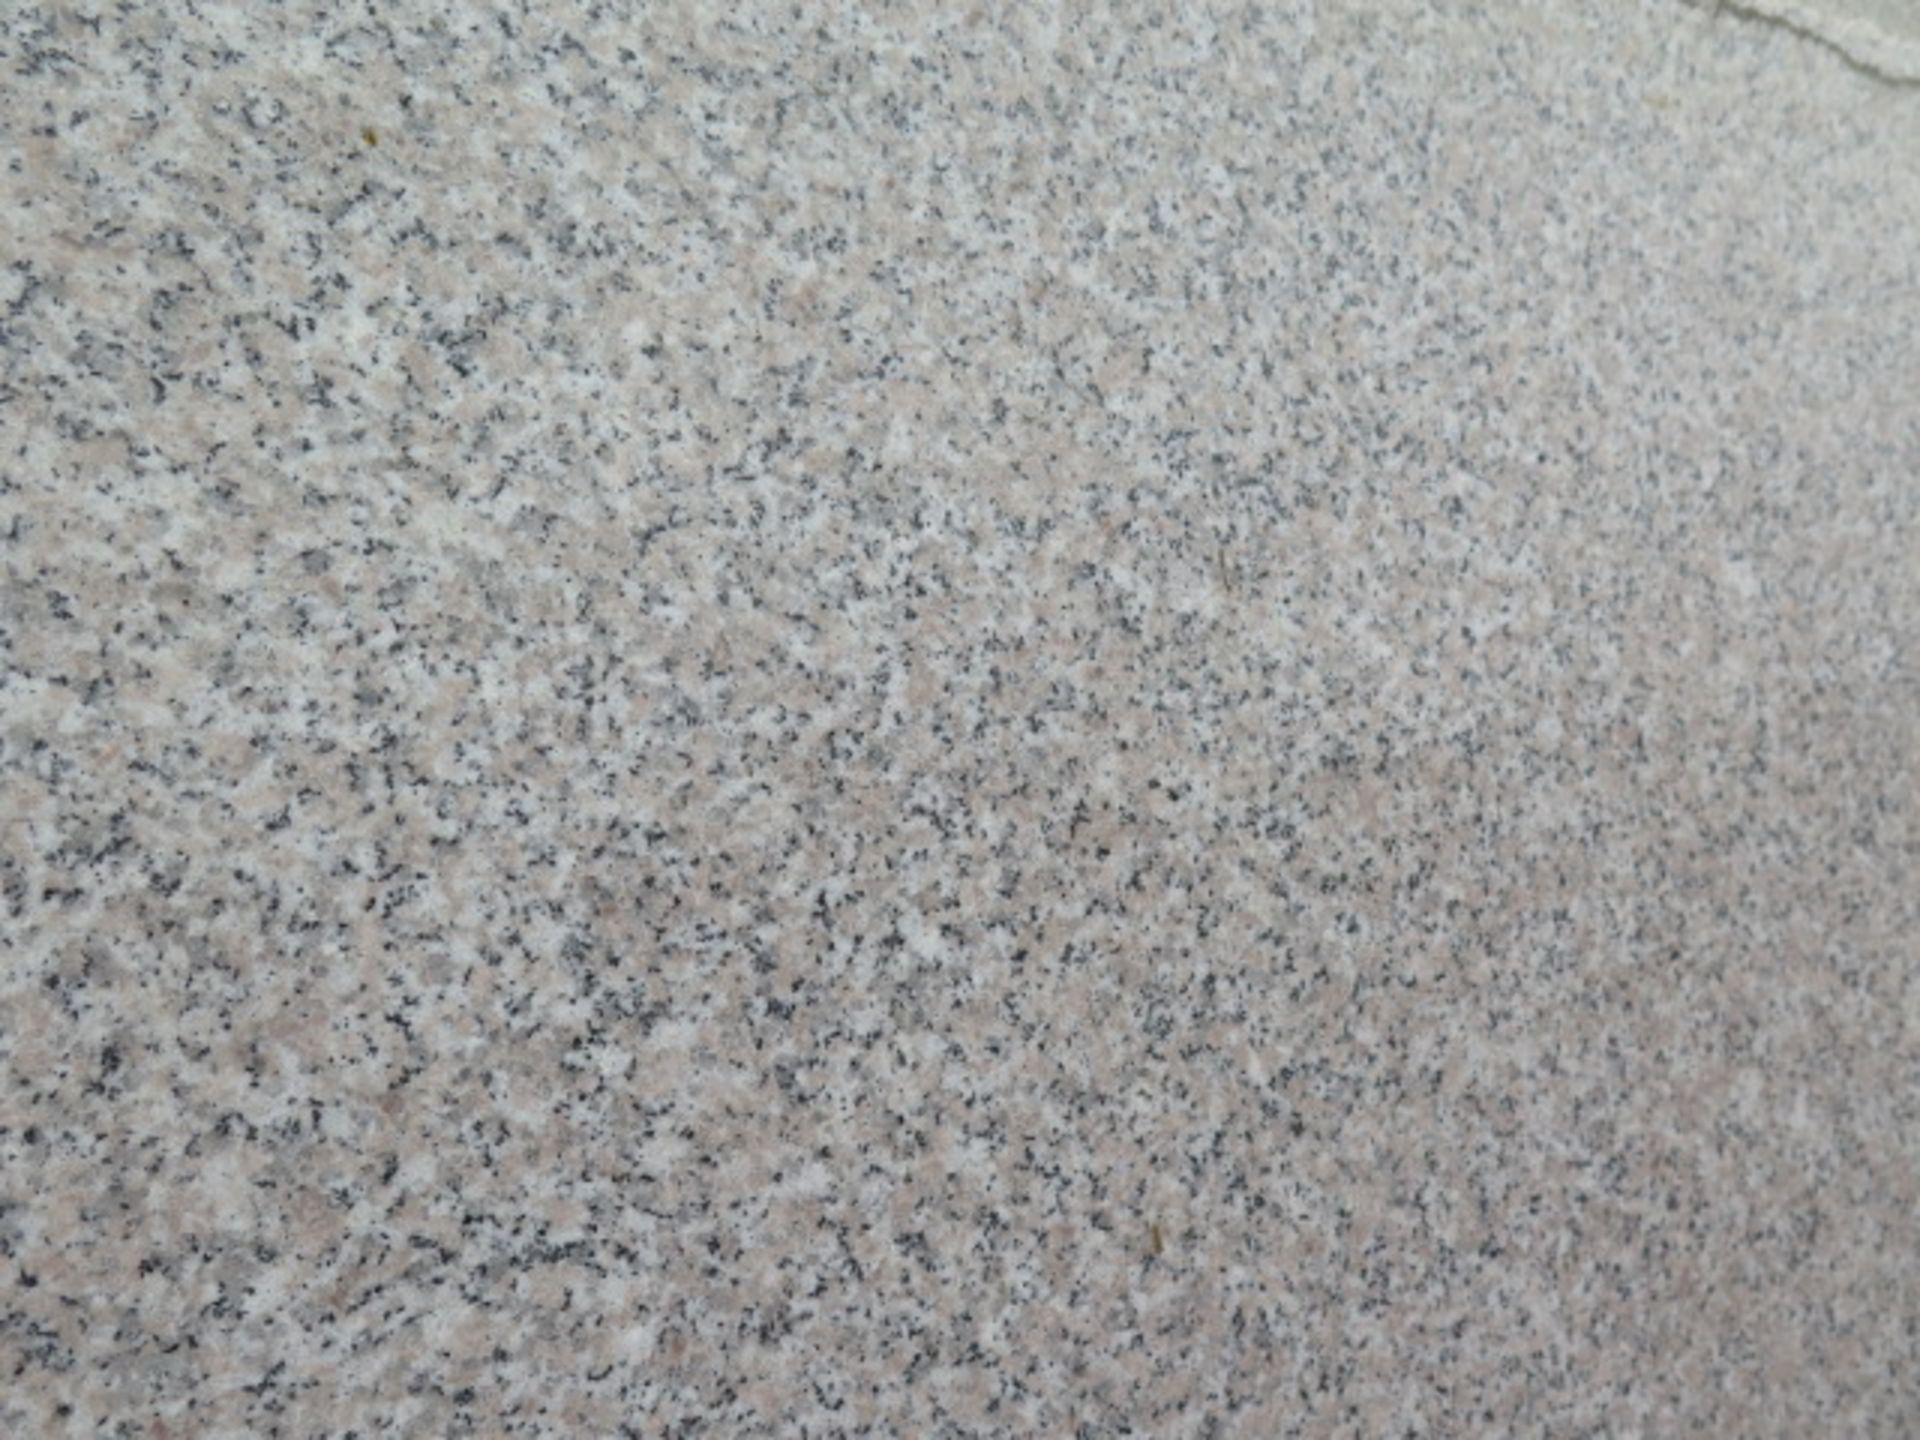 Luna Pearl Granite (6 Slabs) (SOLD AS-IS - NO WARRANTY) - Image 4 of 6